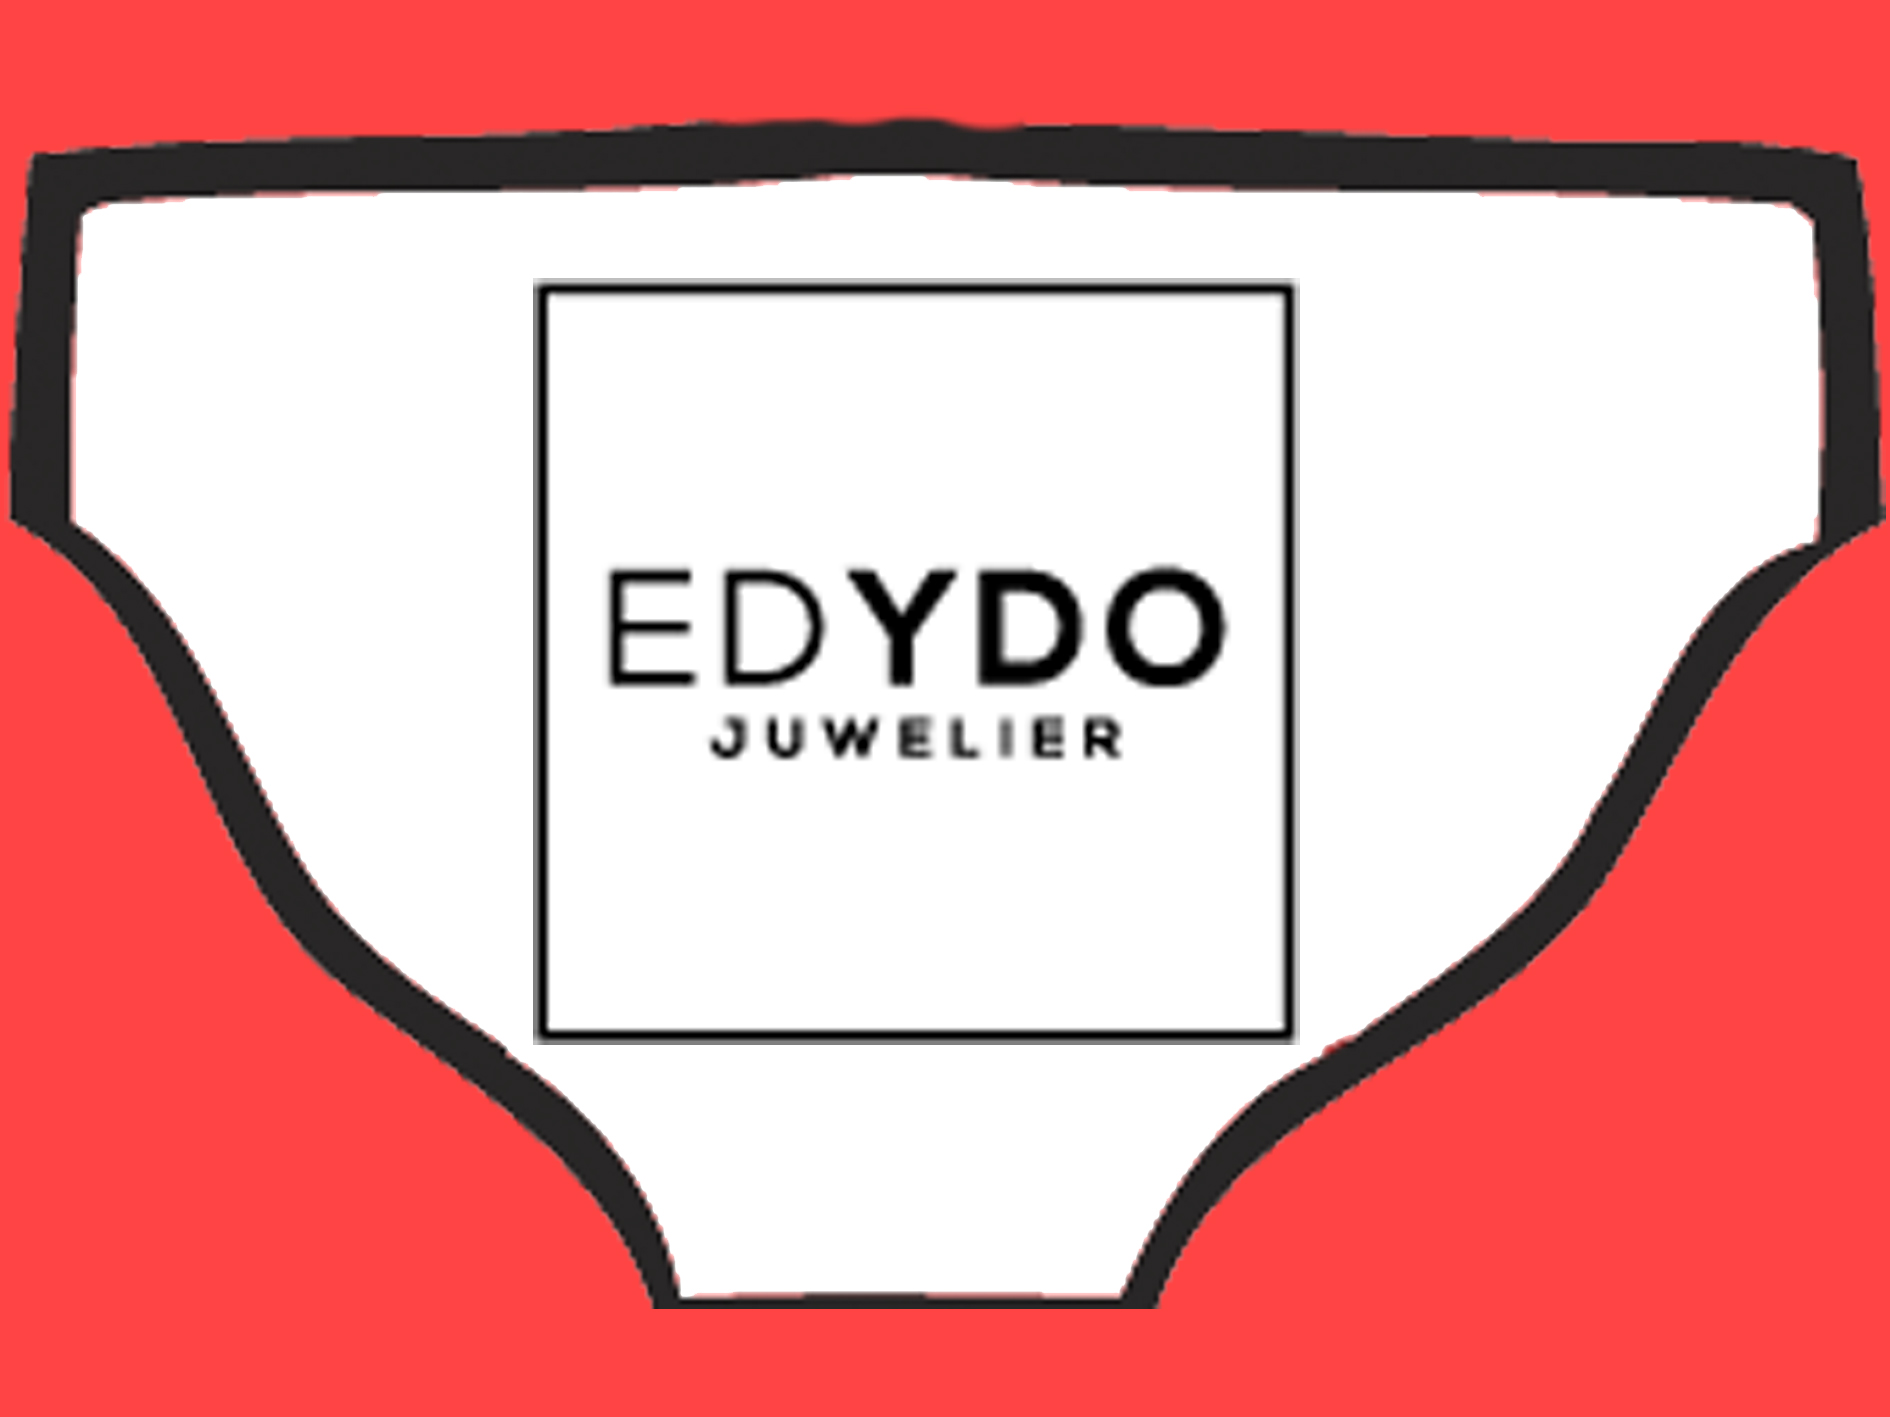 Vriend van de Reuring Ed Ydo juweliers